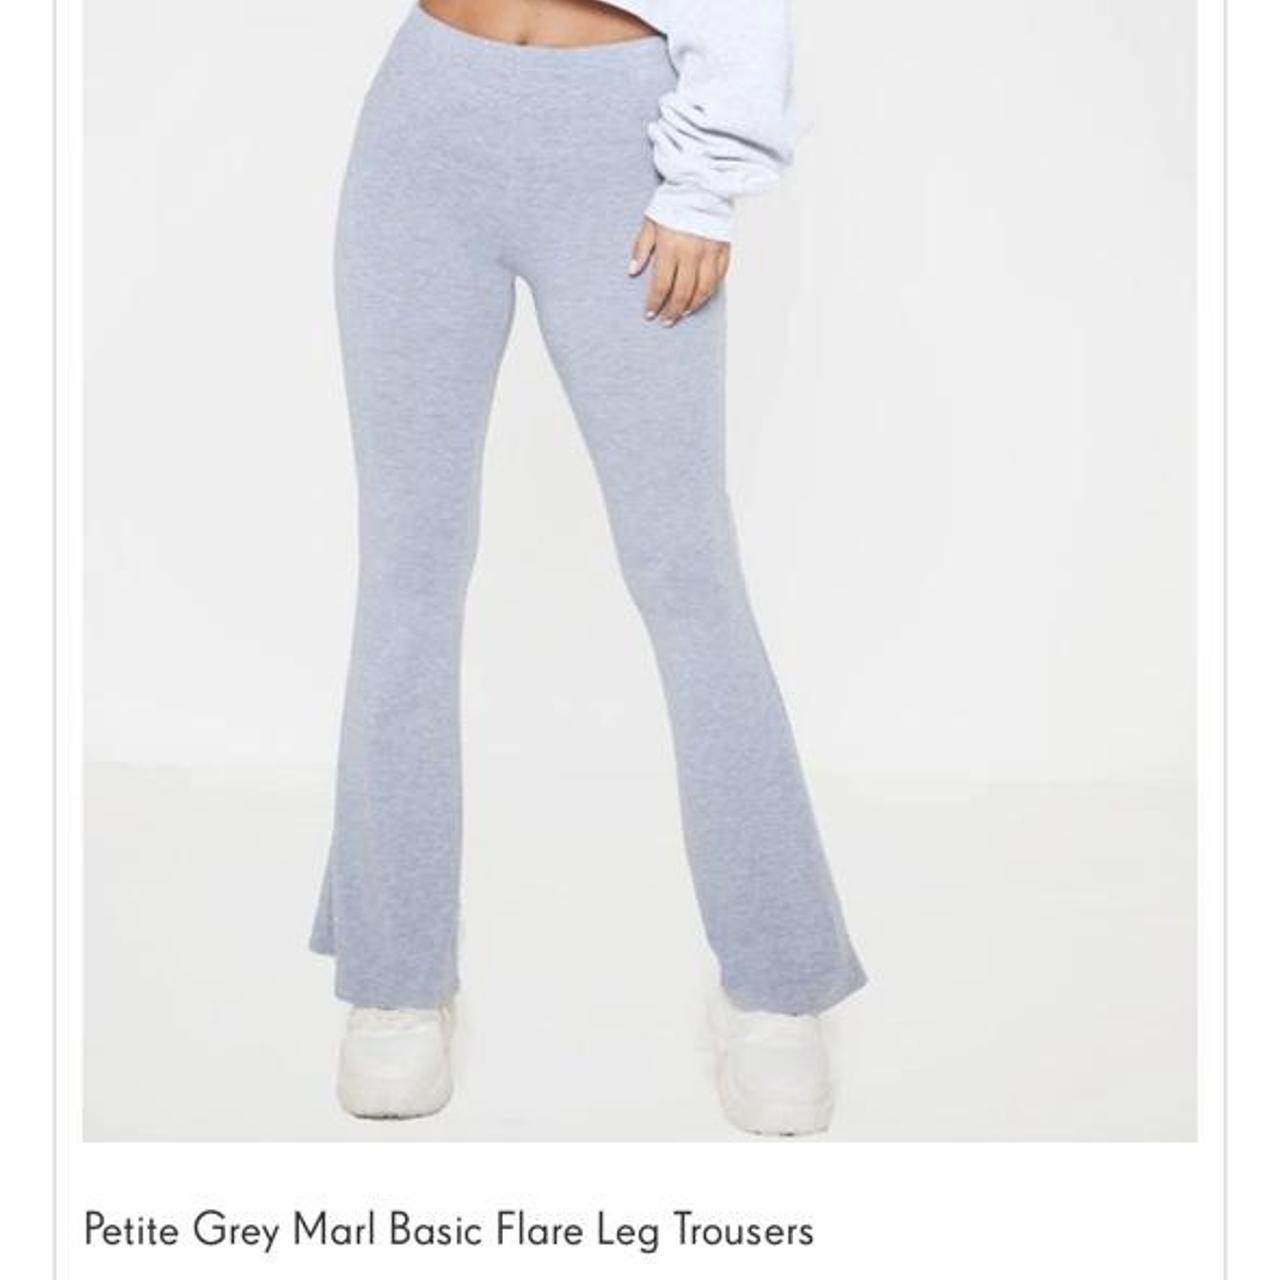 Petite Grey Marl Basic Flare Leg Trousers